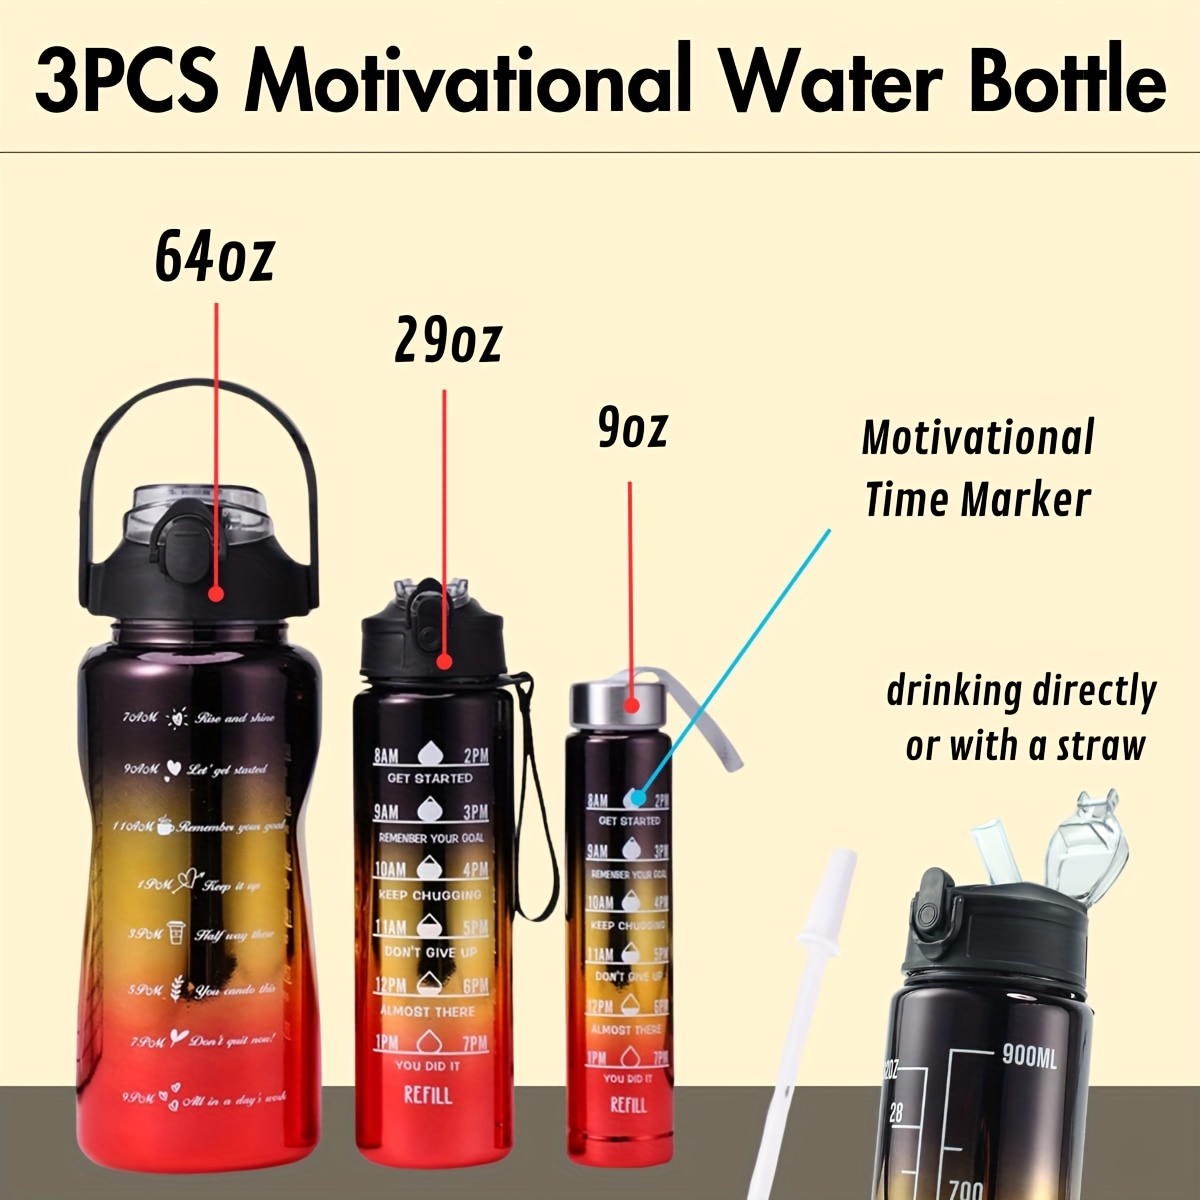 Mumutan 3pack Water Bottles Set Sports, BPA Free,32OZ 16oz 9oz Leak-proof  Water Bottle Cups with Dri…See more Mumutan 3pack Water Bottles Set Sports